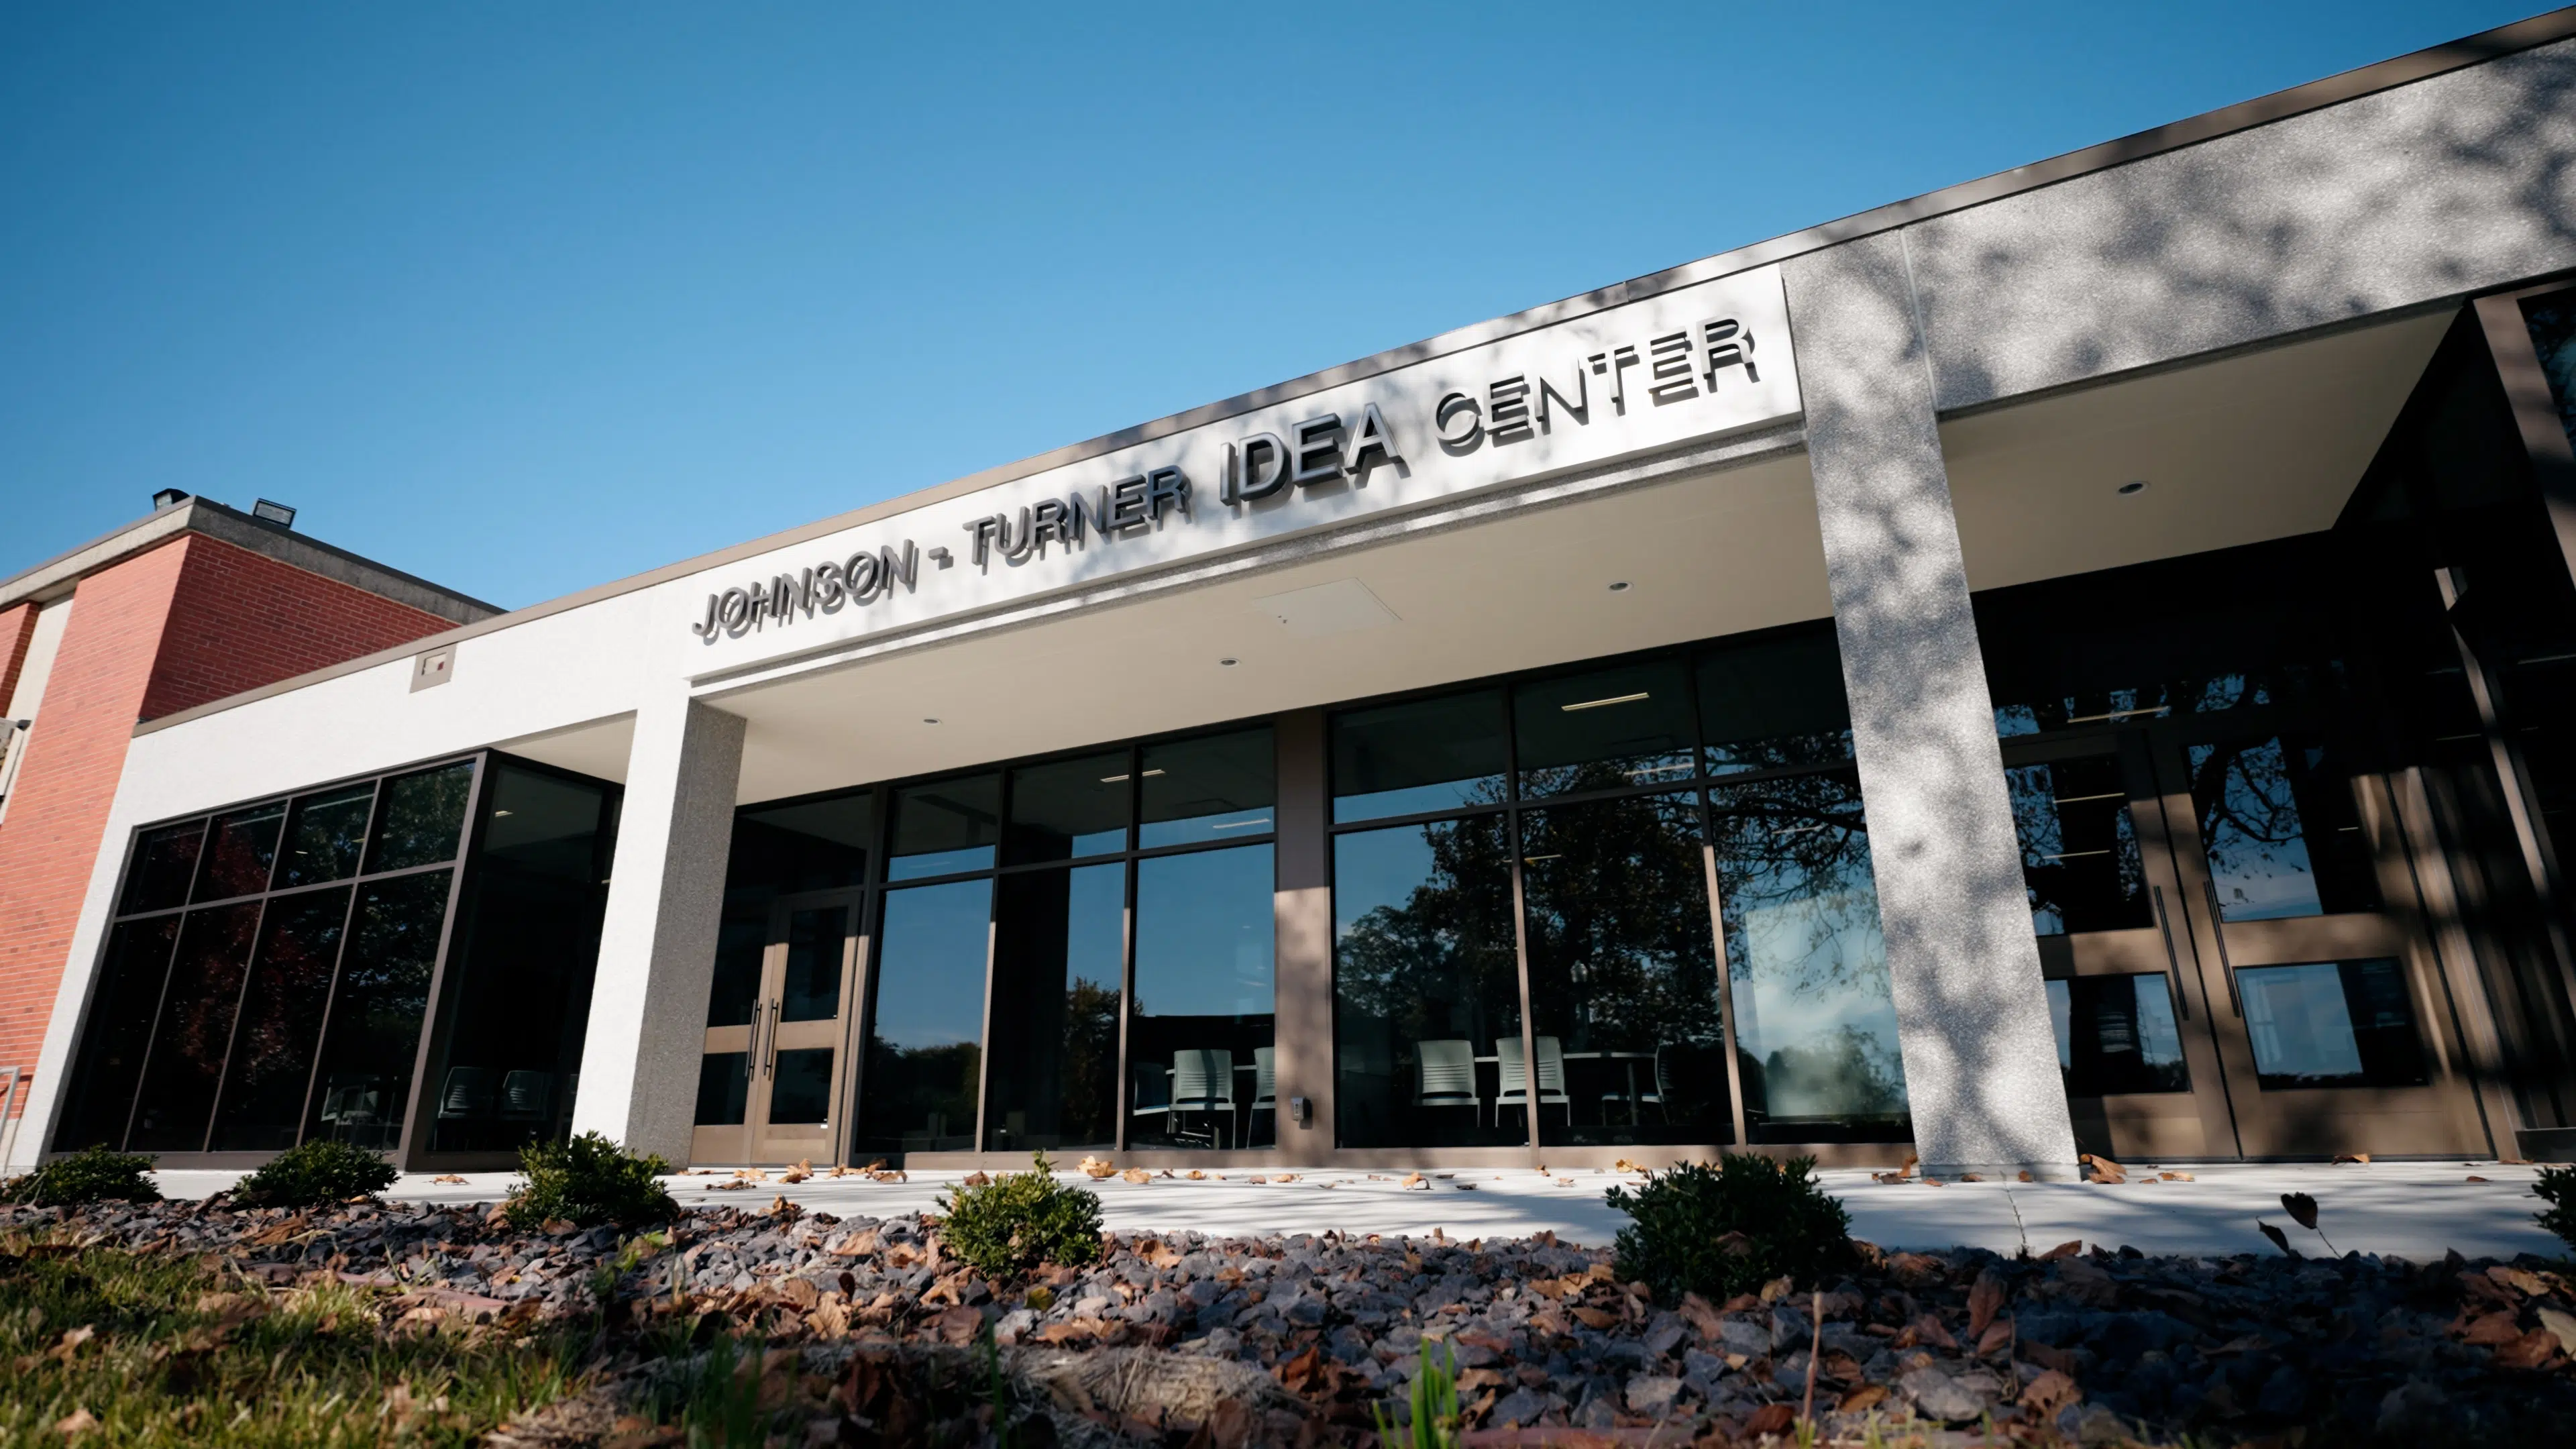 Johnson Turner IDEA Center